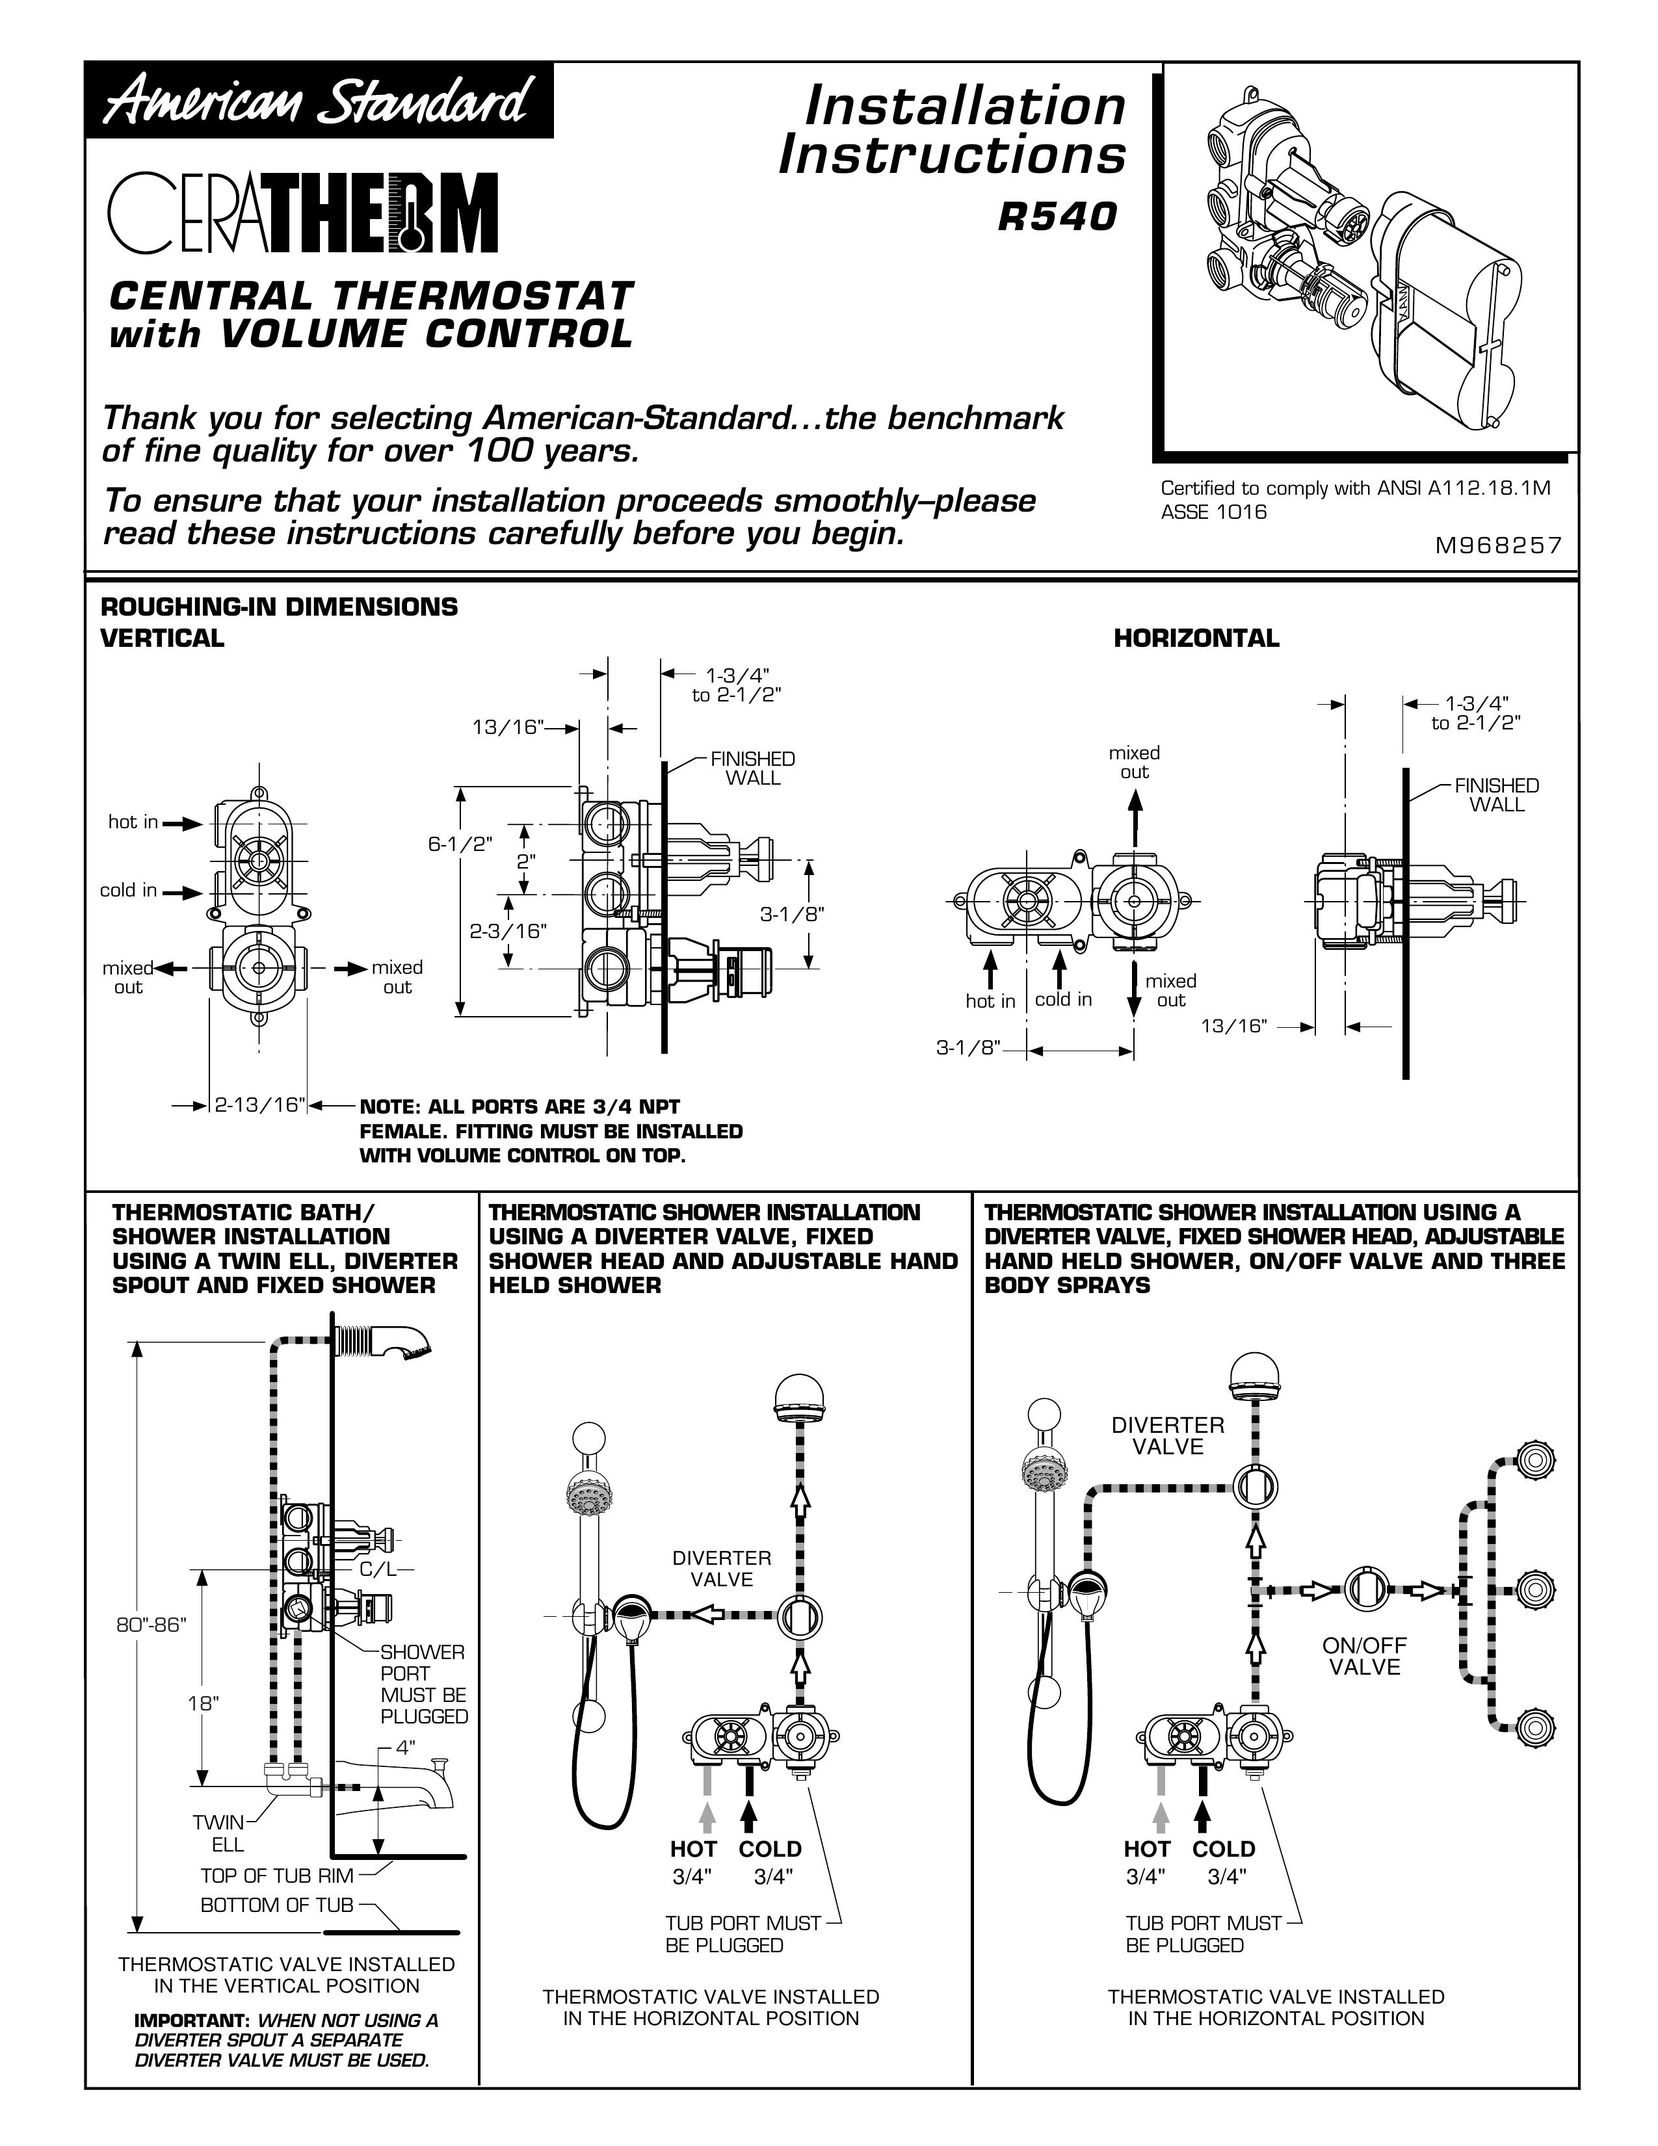 American Standard R540 Thermostat User Manual